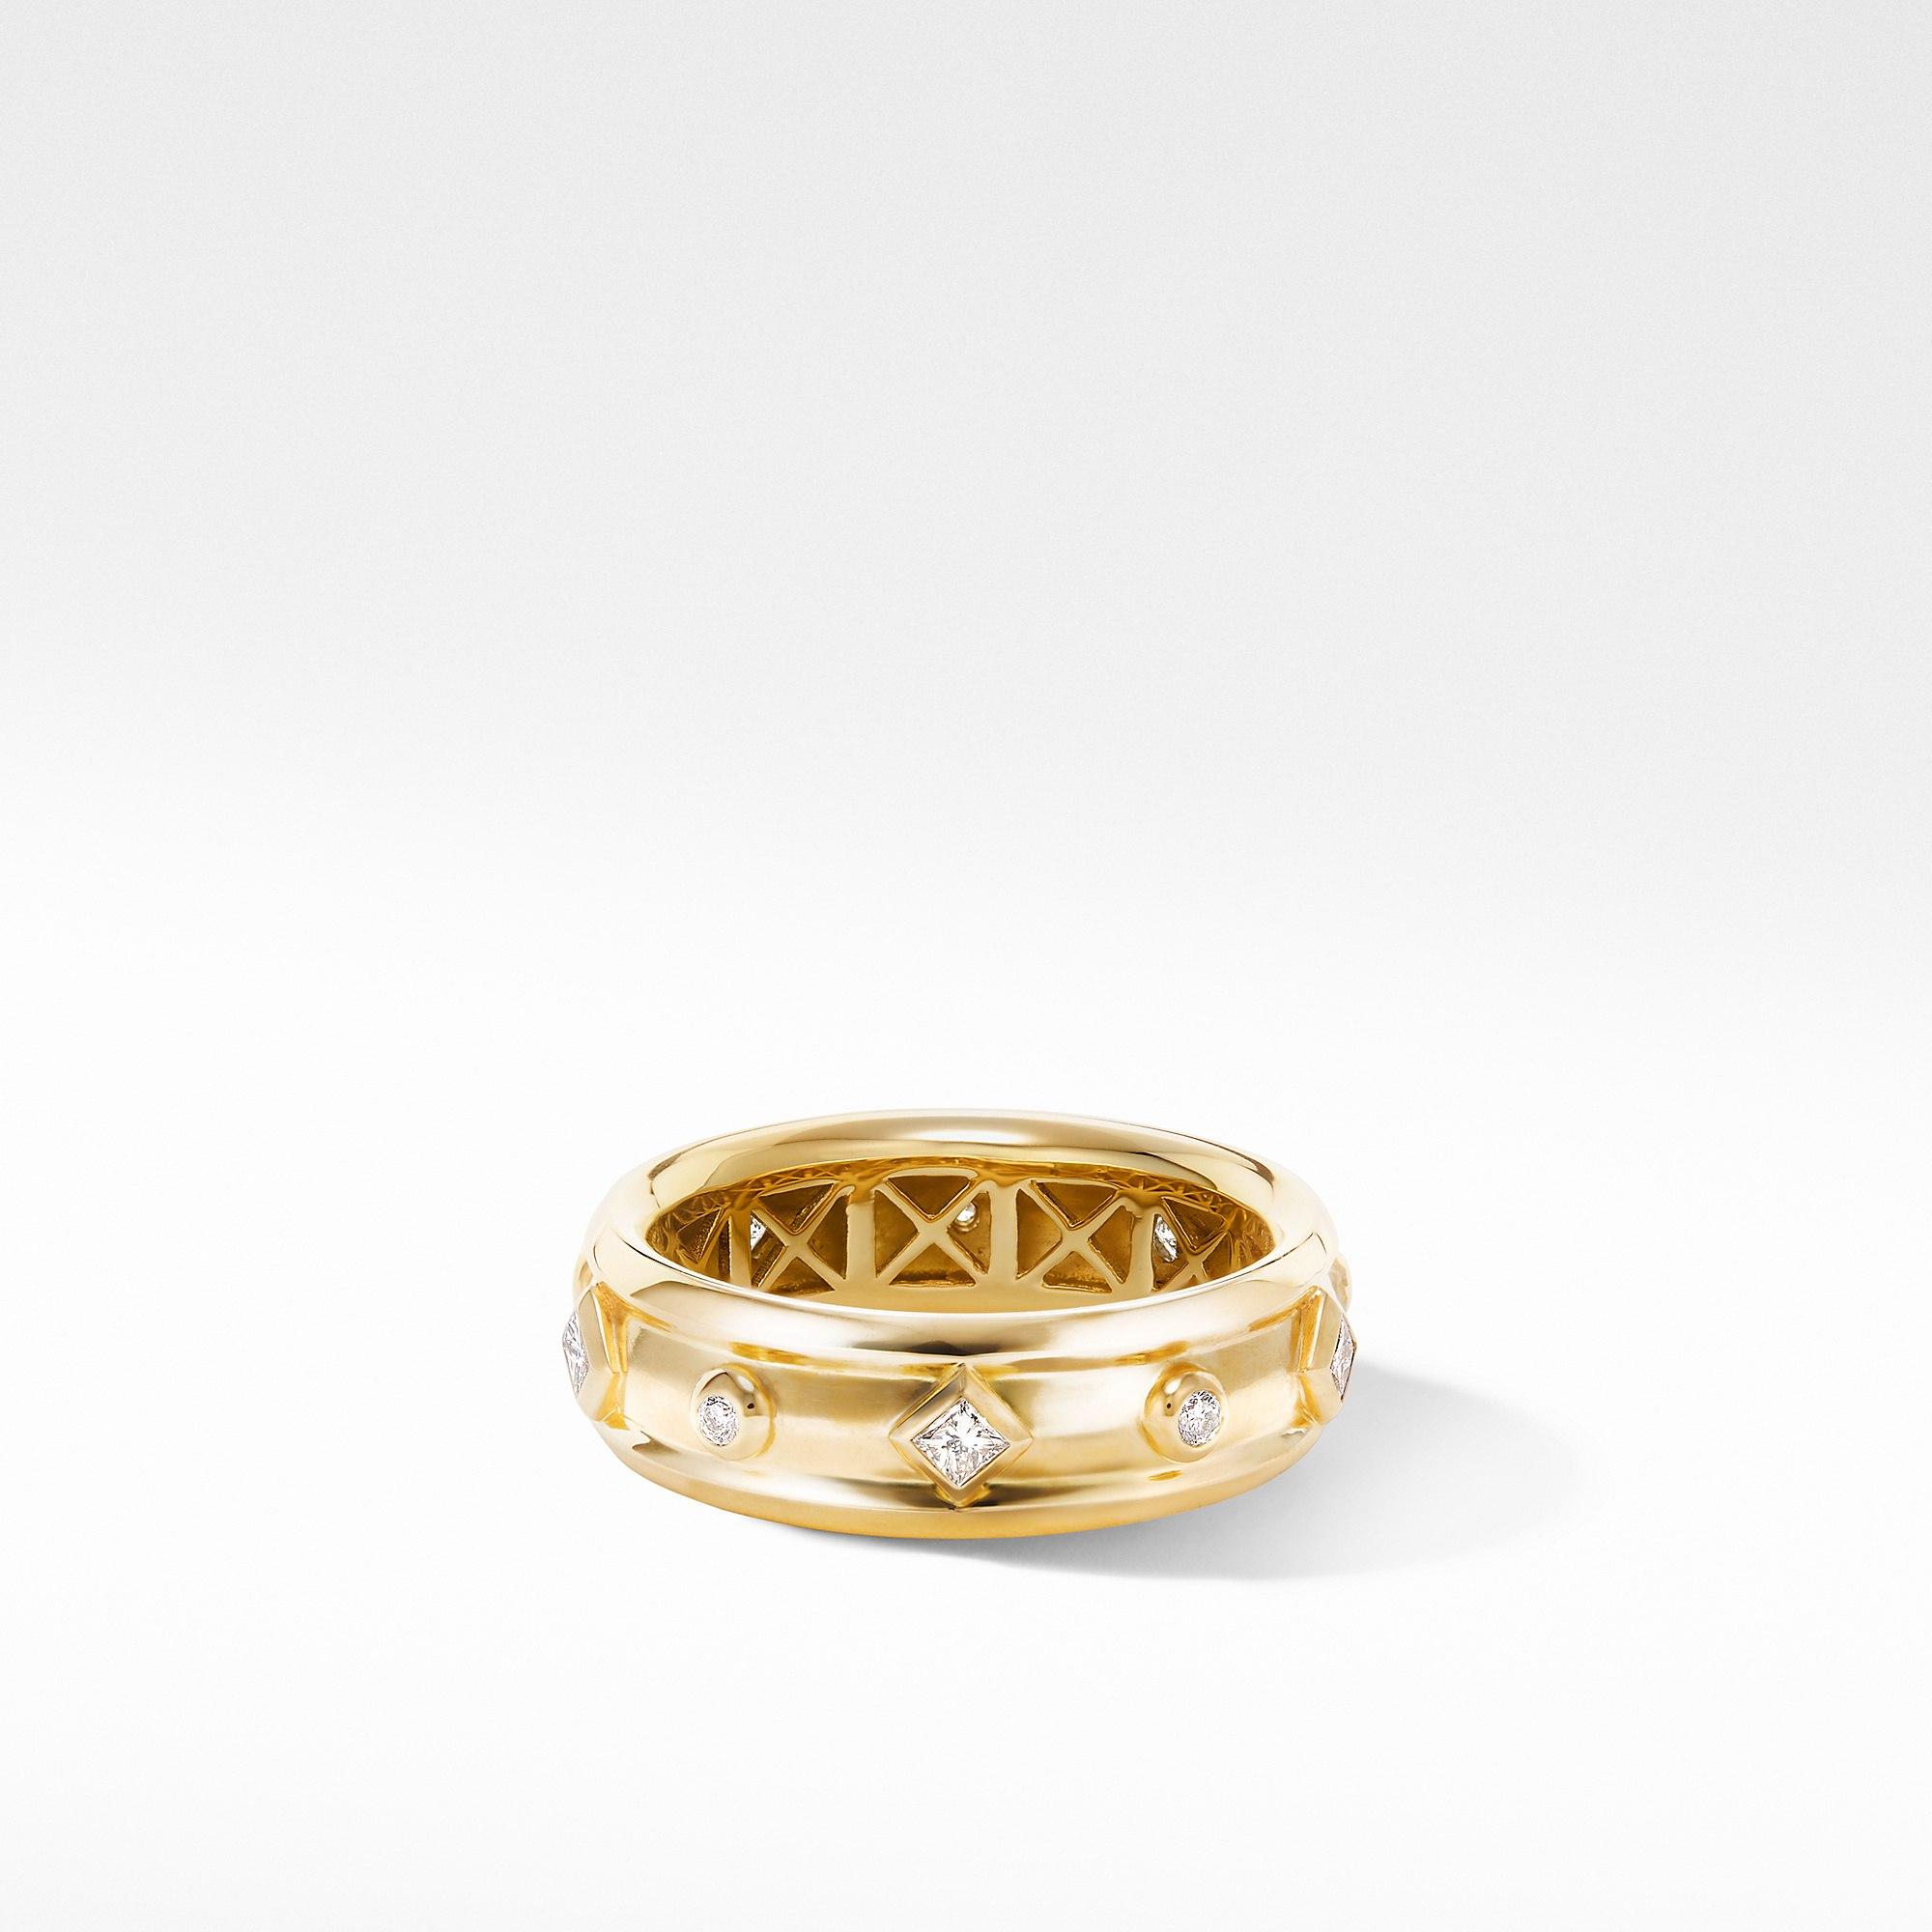 David Yurman Modern Renaissance Ring in 18k Yellow Gold with Diamonds